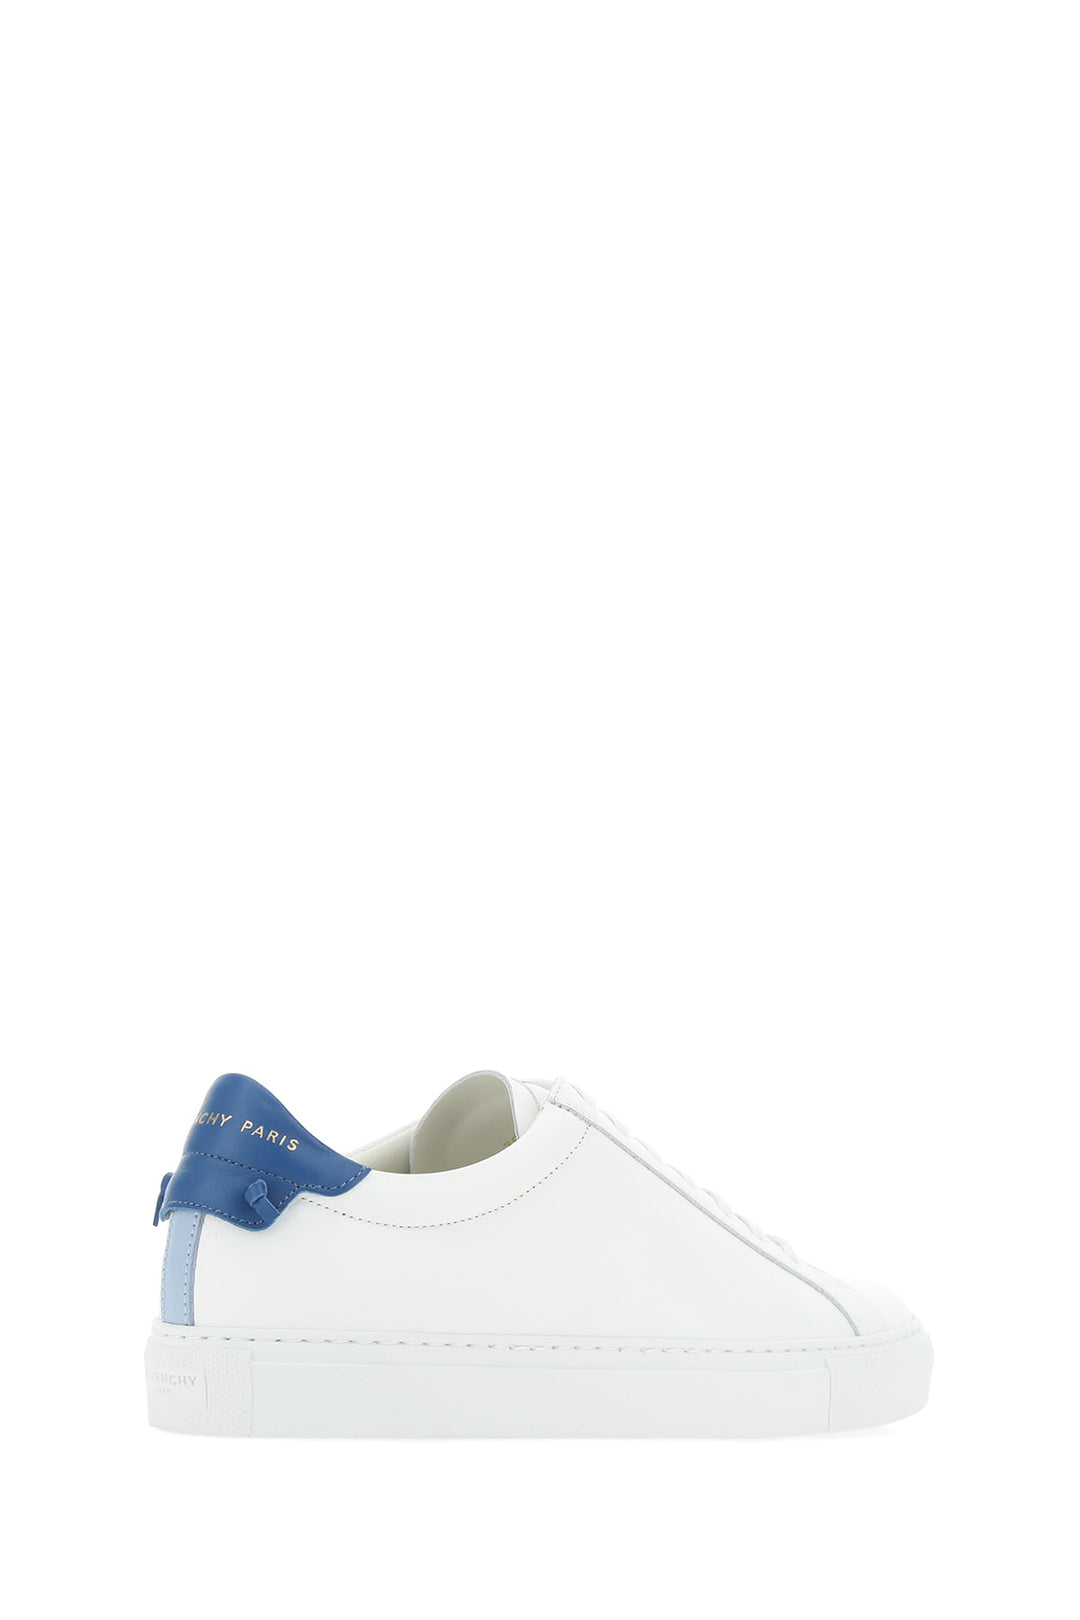 Sneakers Urban in pelle bianca-Givenchy-Wanan Luxury